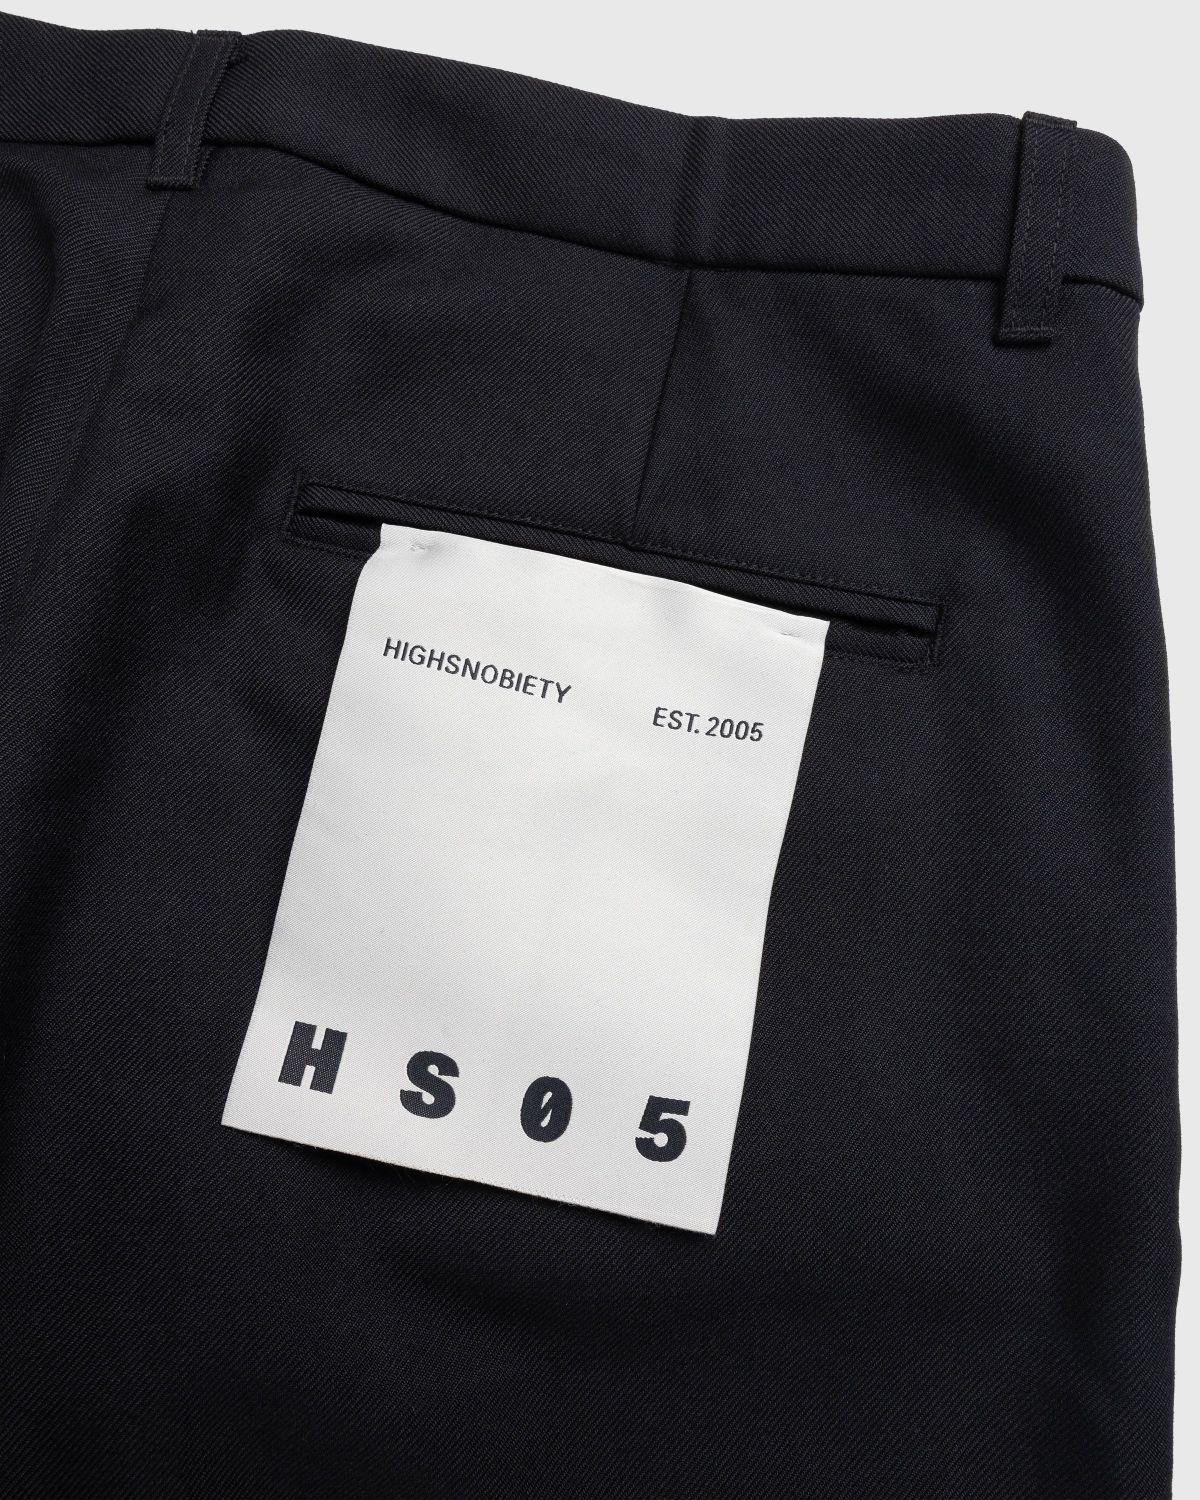 Highsnobiety HS05 – Wool Dress Pants Black - Pants - Black - Image 7